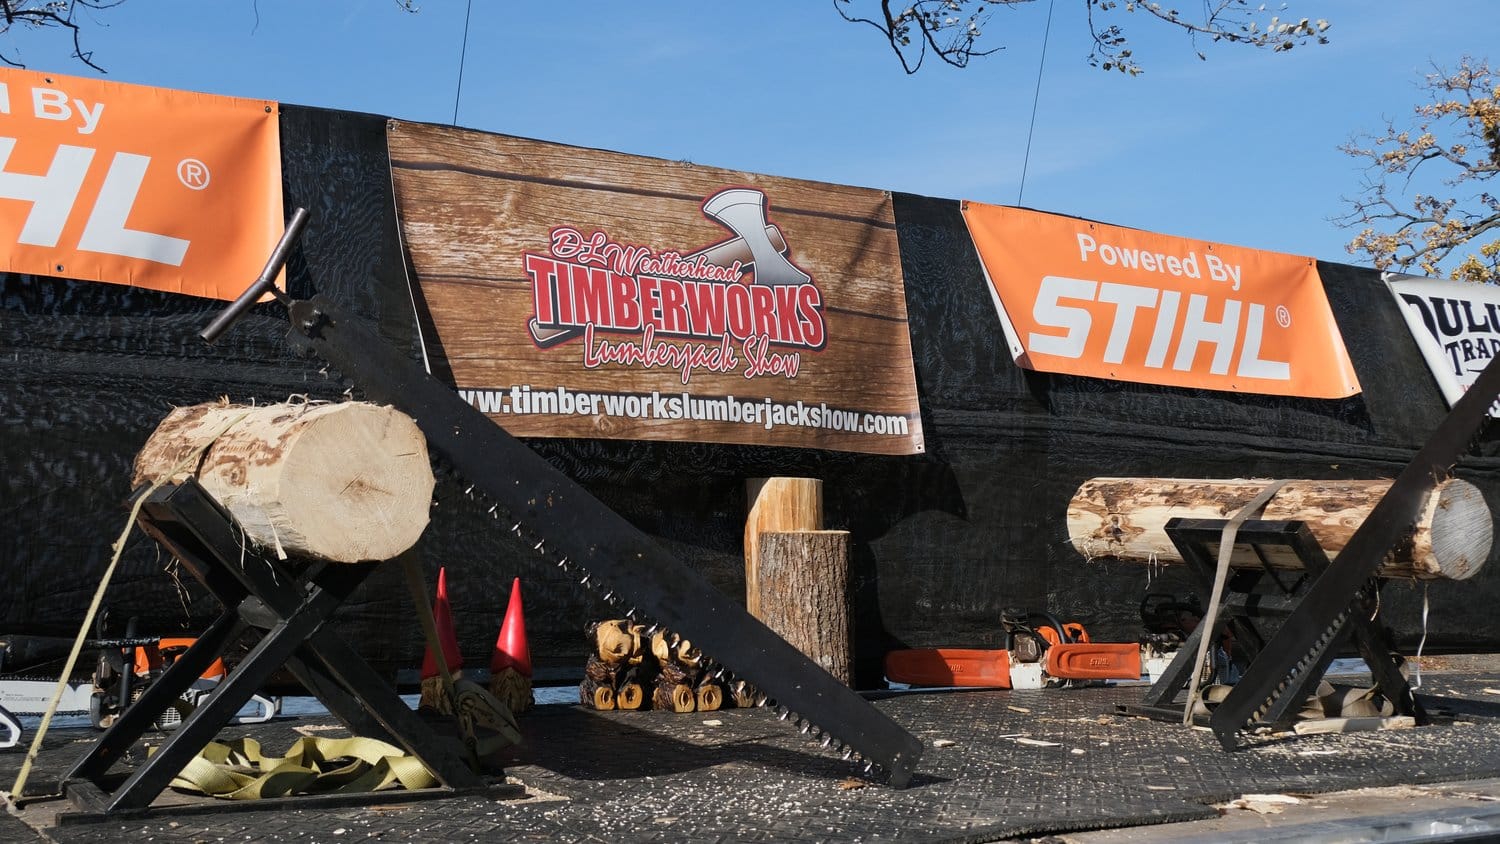 DL Weatherhead Timberwork's Lumberjack Show.